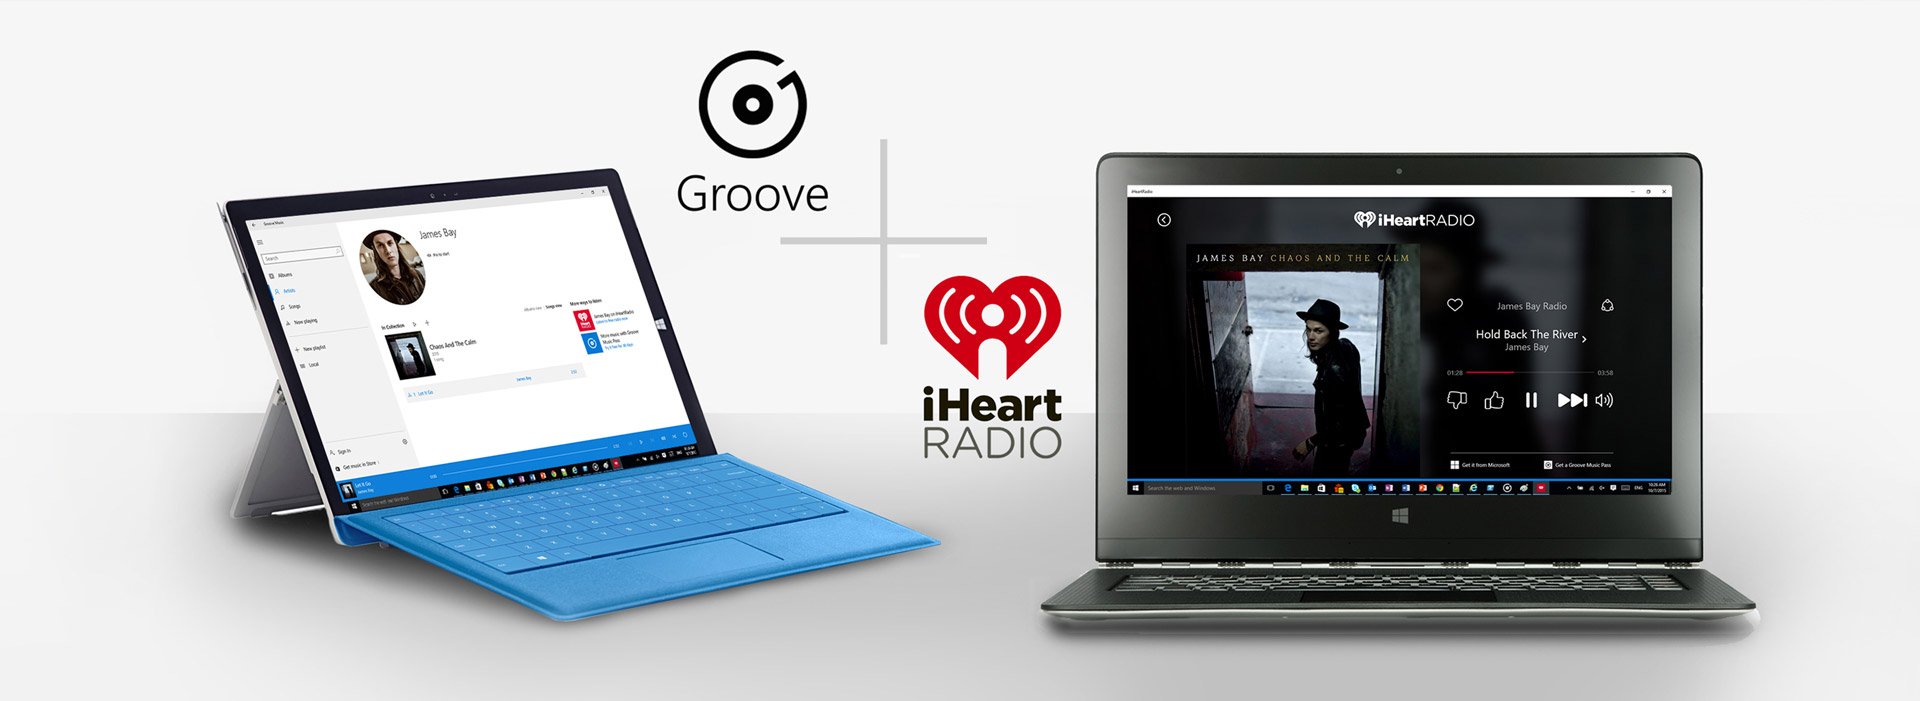 Microsoft Groove iHeartRadio